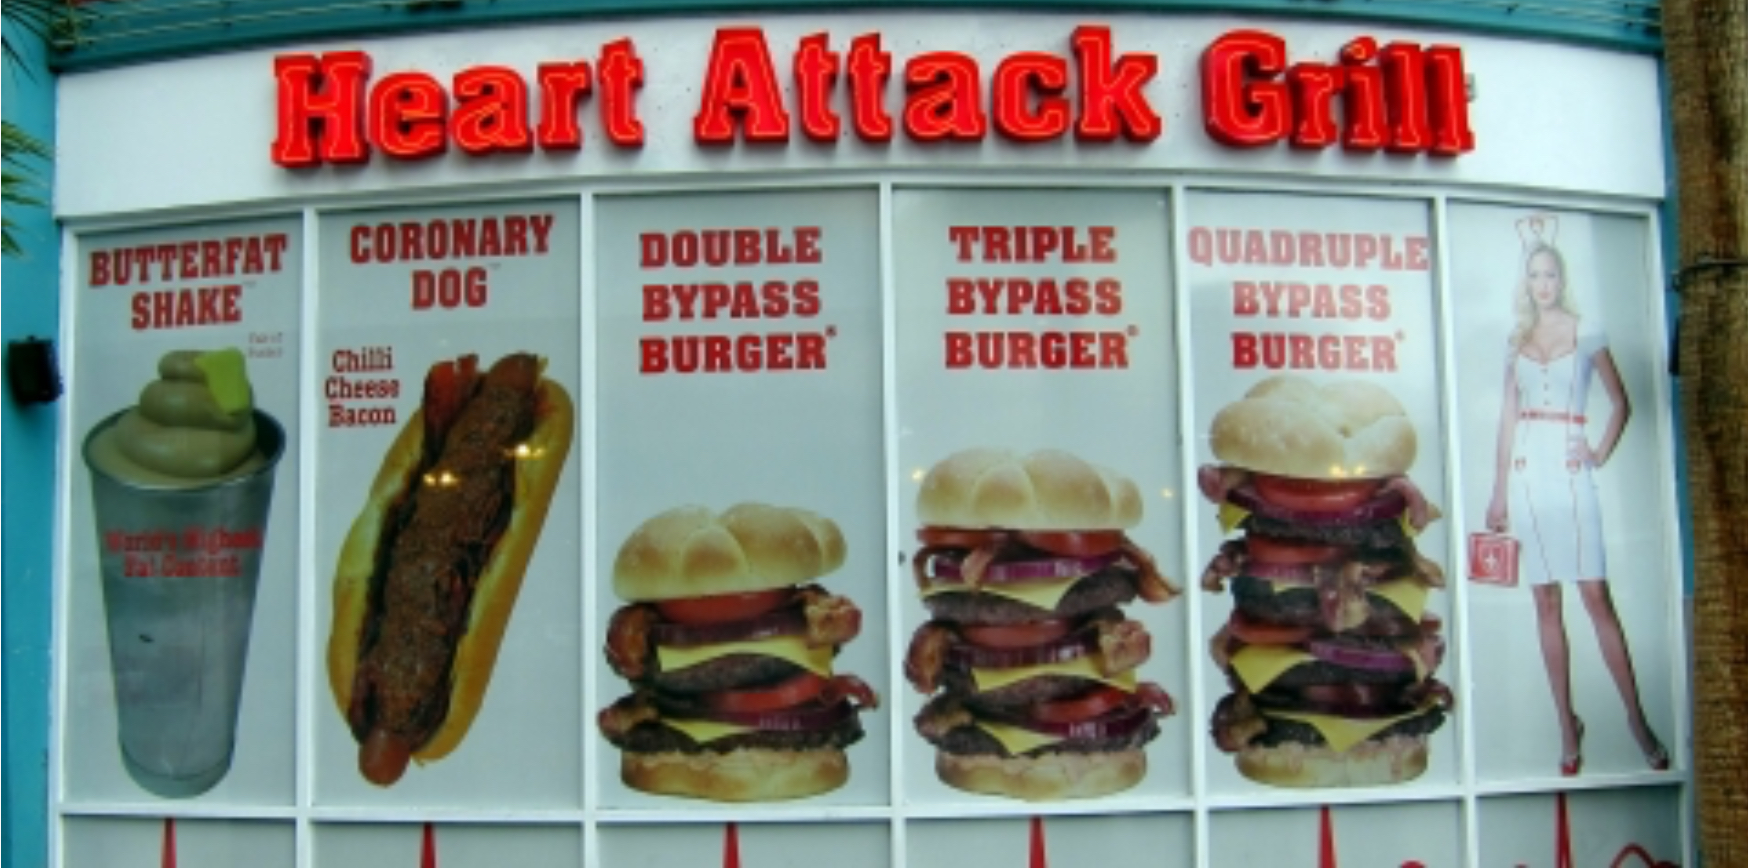 Heart attack grill